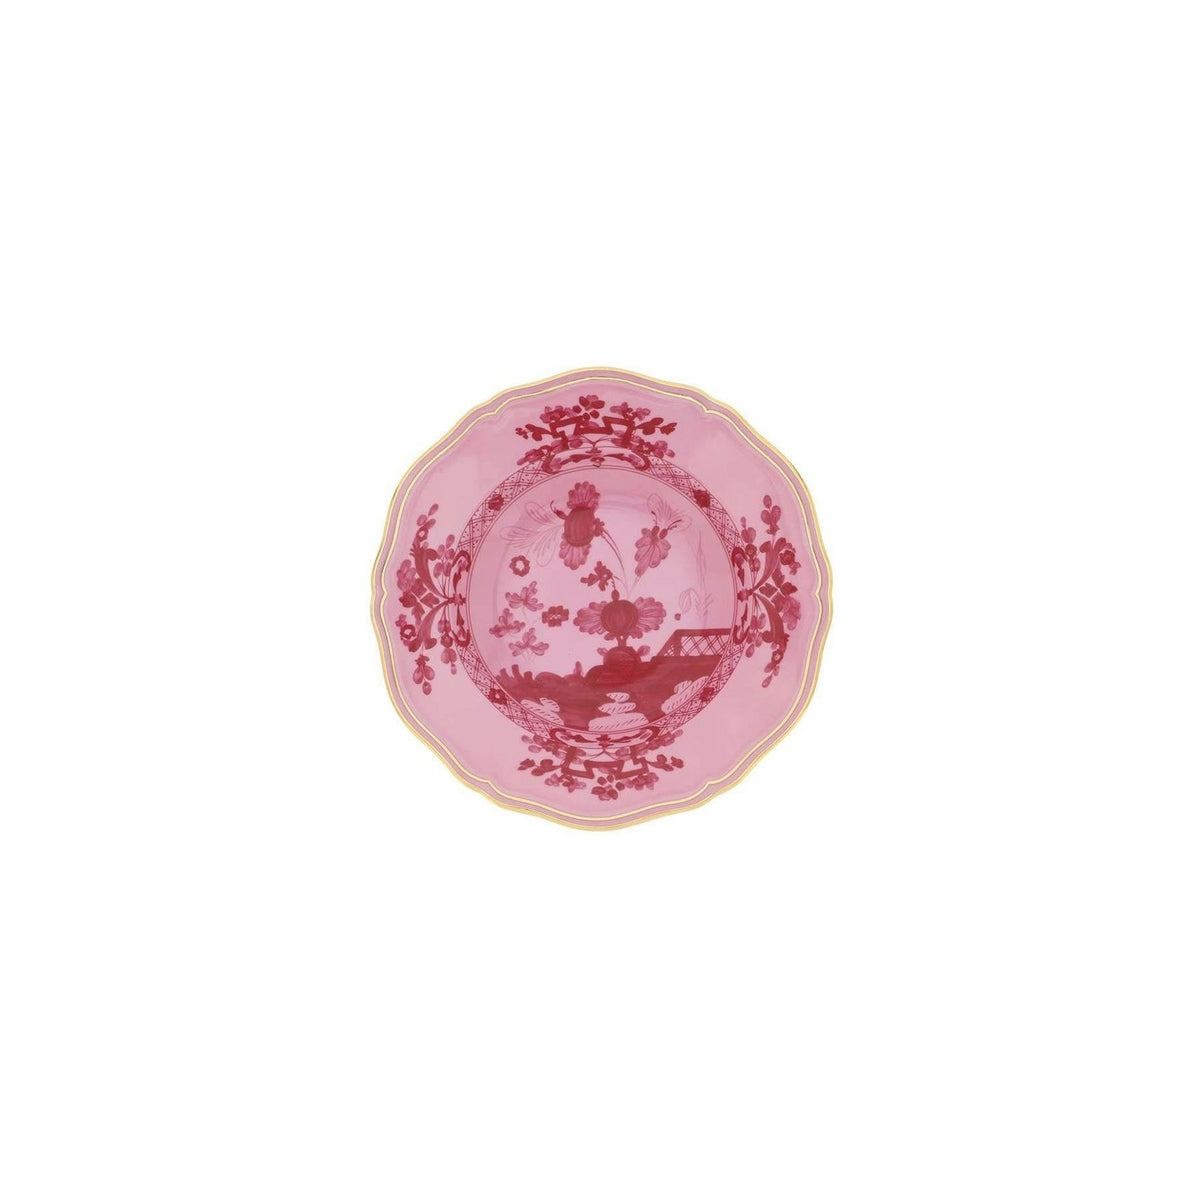 GINORI 1735 - Oriente Italiano' Soup Plate - JOHN JULIA